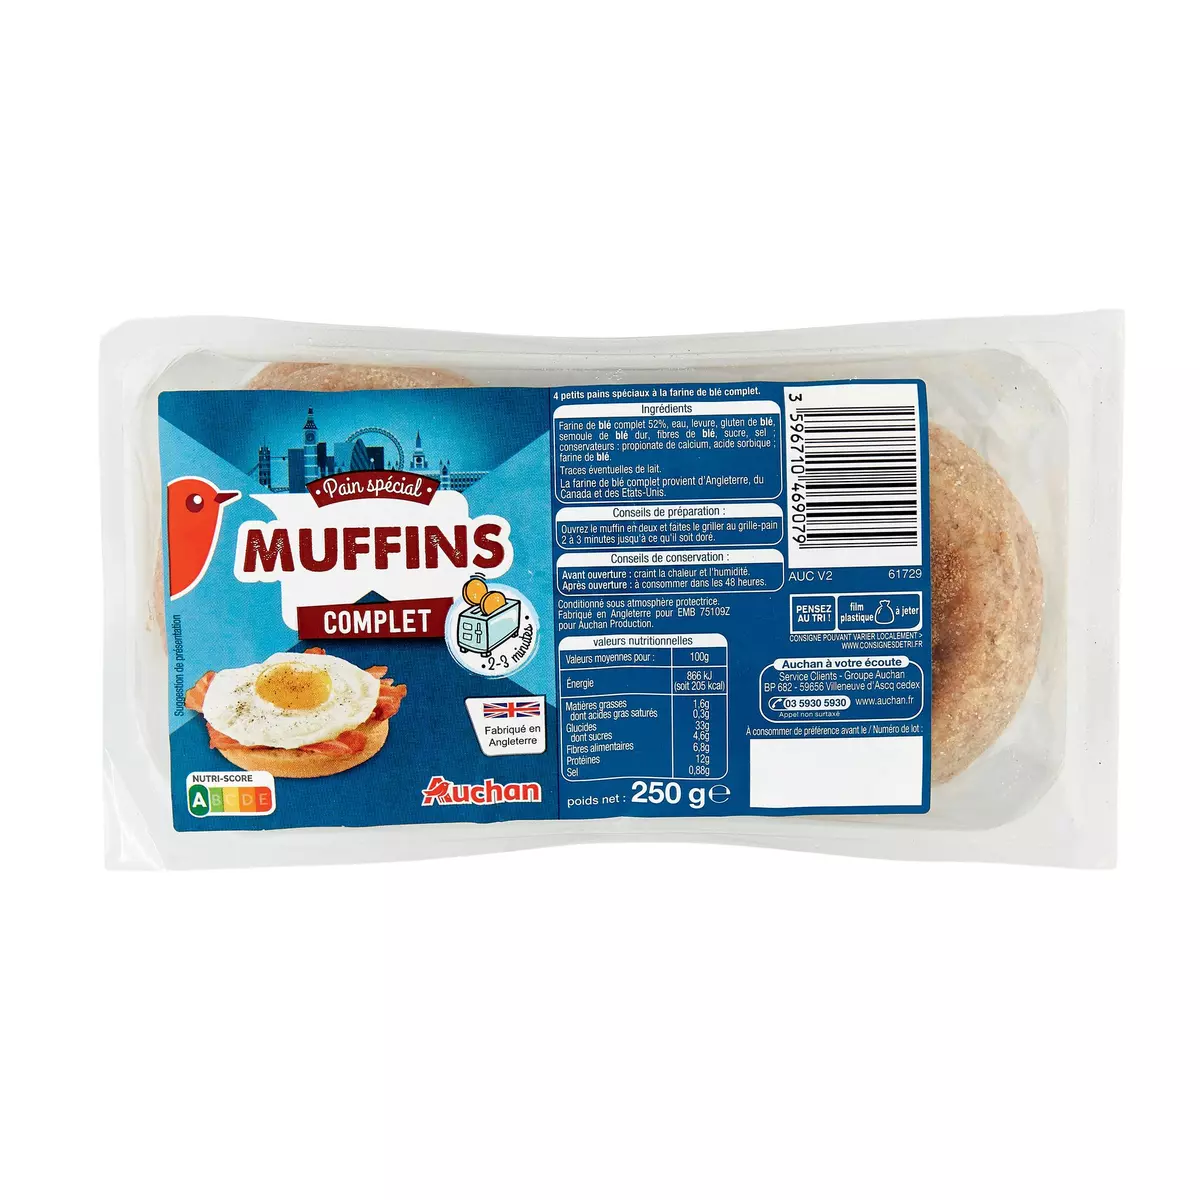 AUCHAN Muffins complets 4 muffins 250g